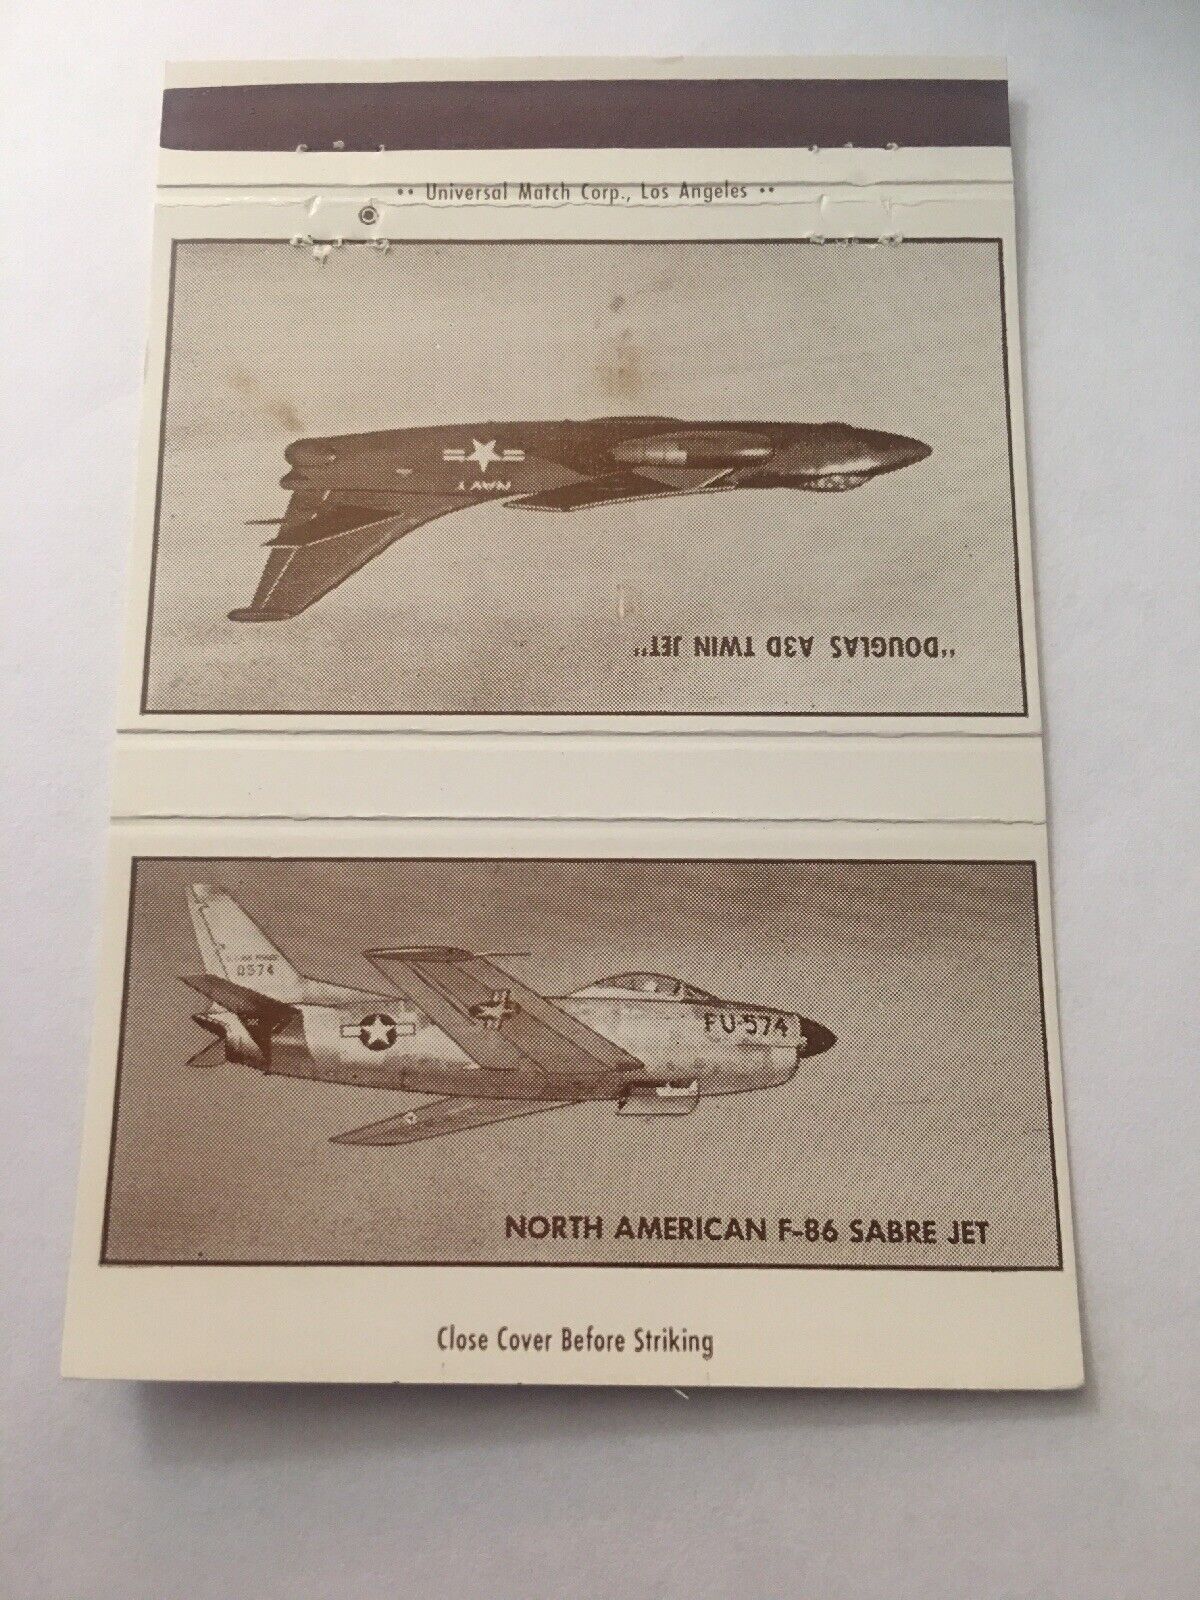 Vintage Matchbook Cover Matchcover Aircraft F-86 Sabre Jet & A3D Bomber